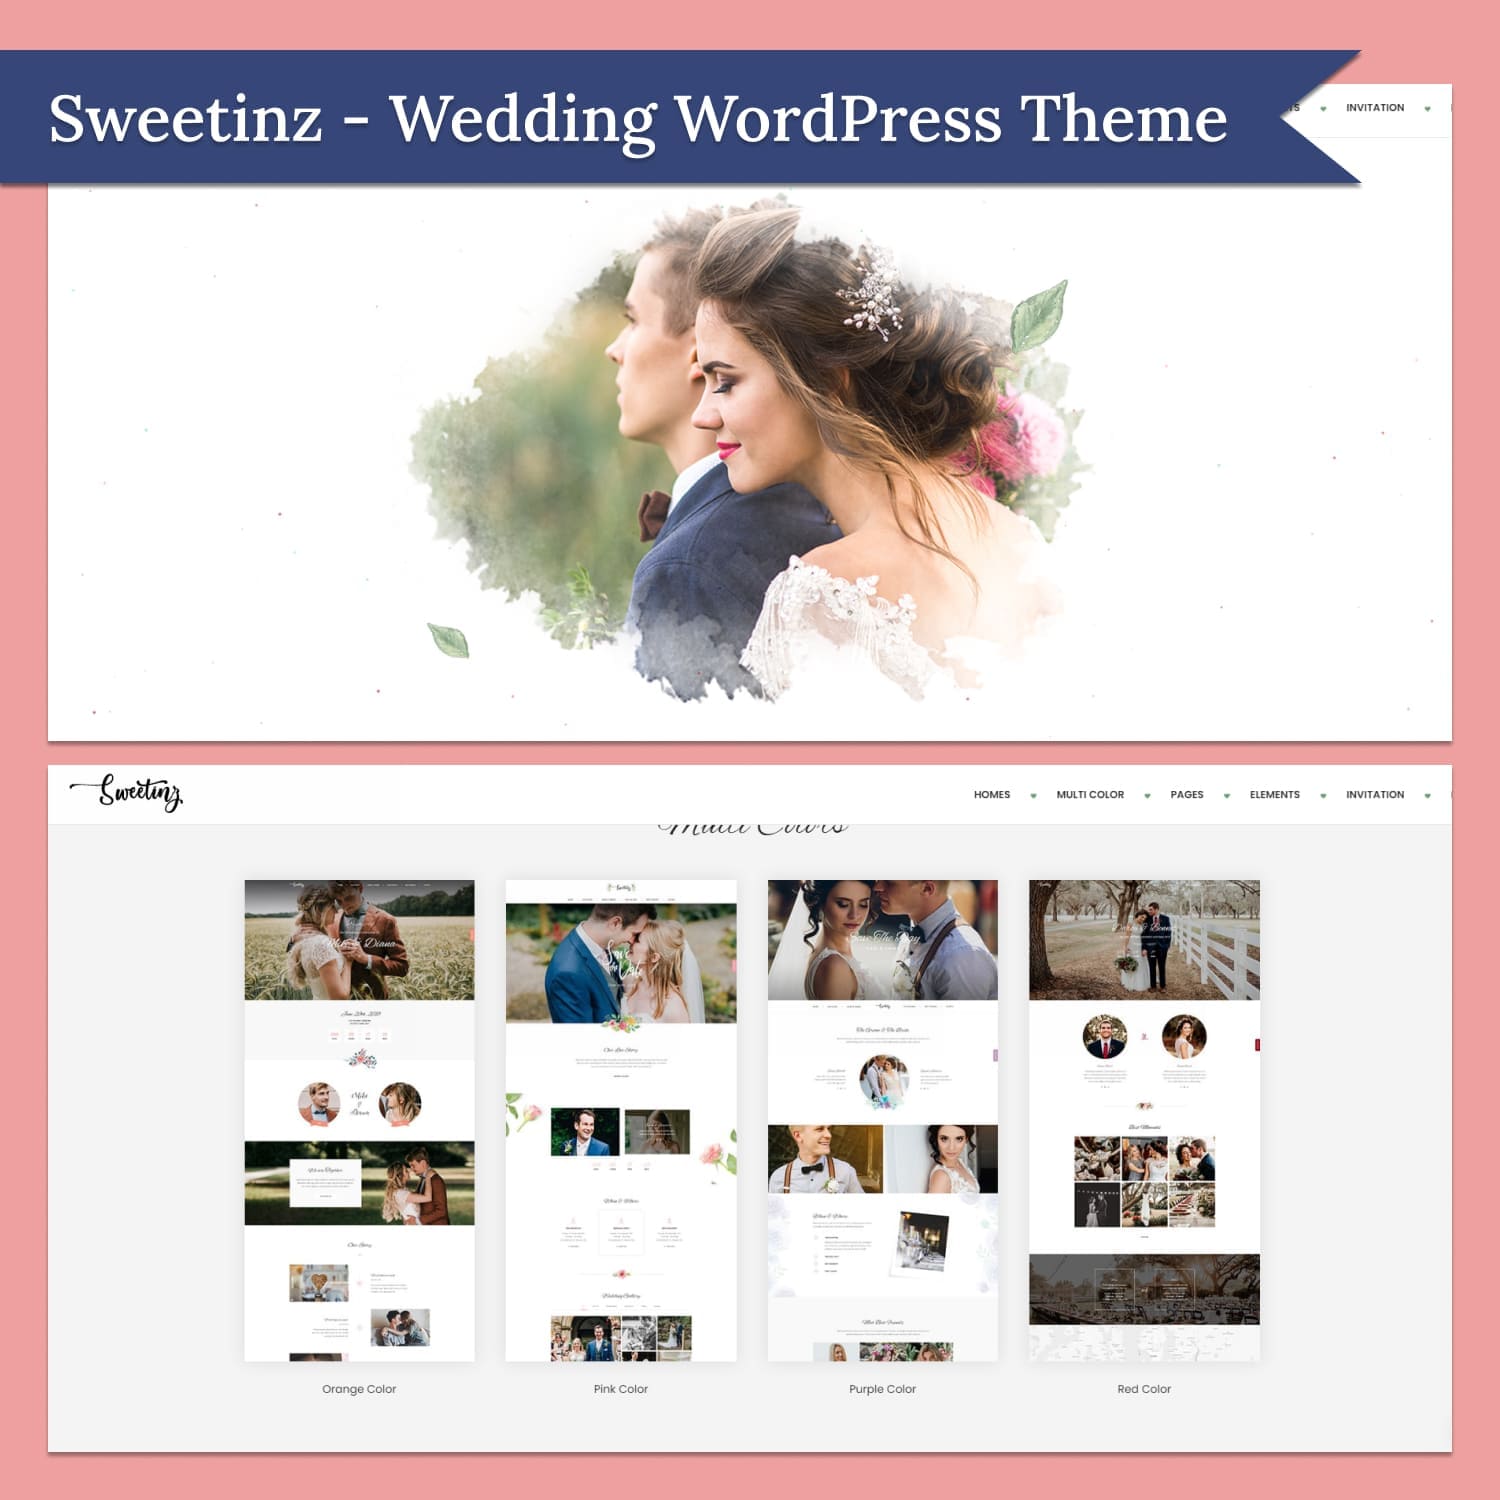 Sweetinz creative onepage wedding wordpress theme, main picture 1500x1500.